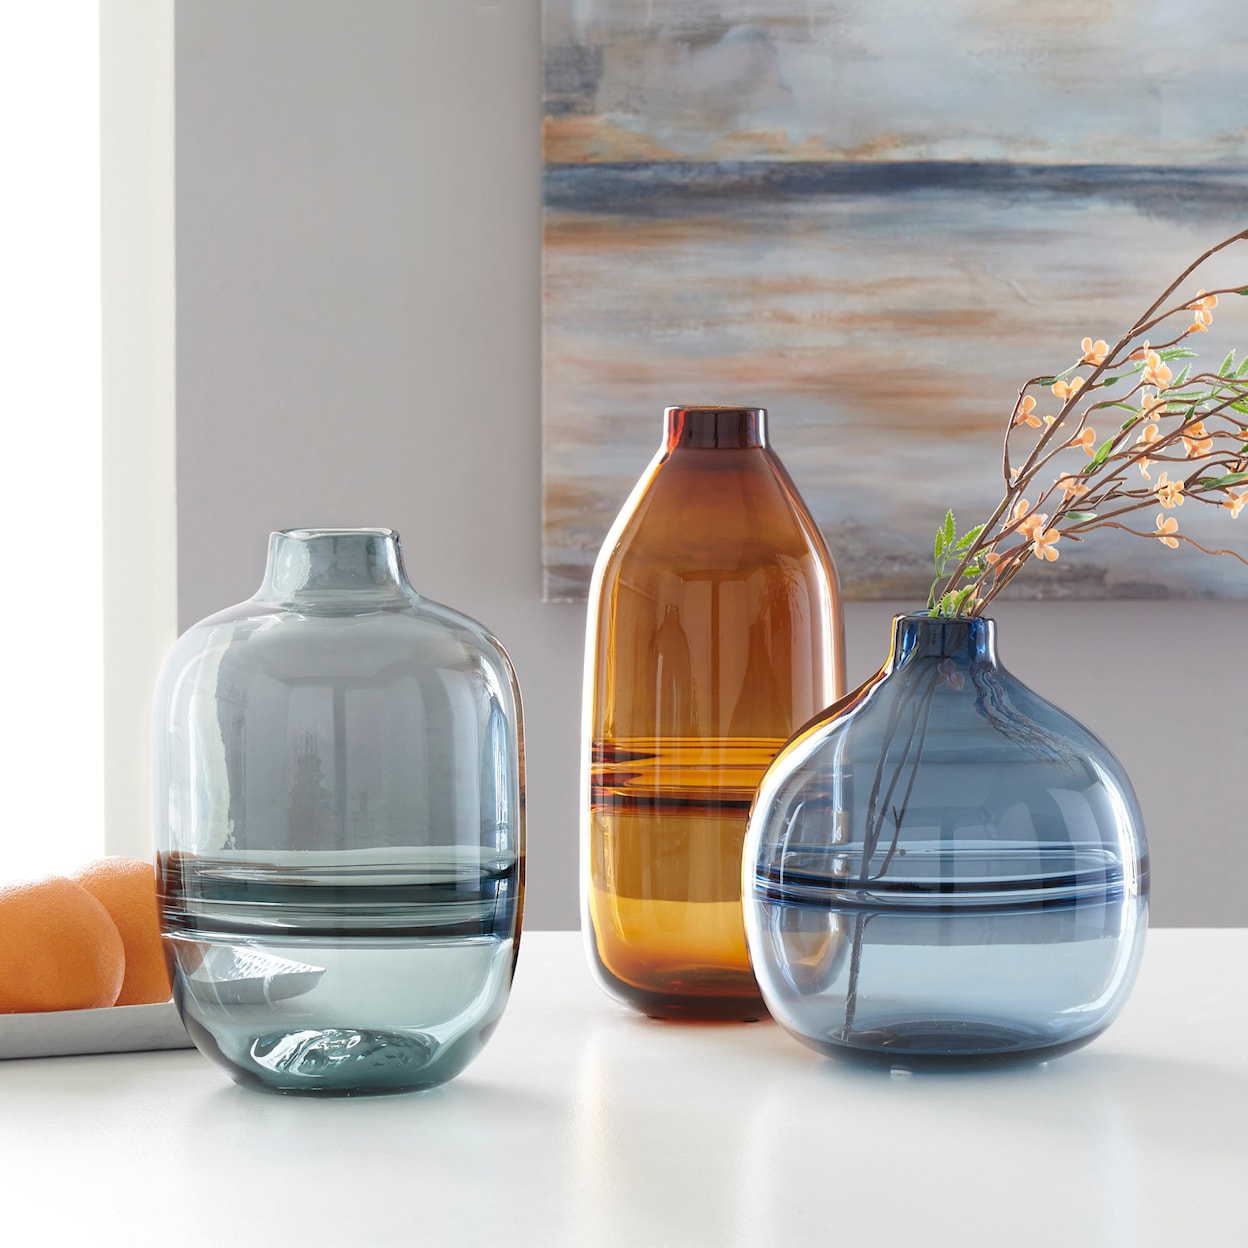 Ashley Furniture Signature Design Accents Lemmitt Vase